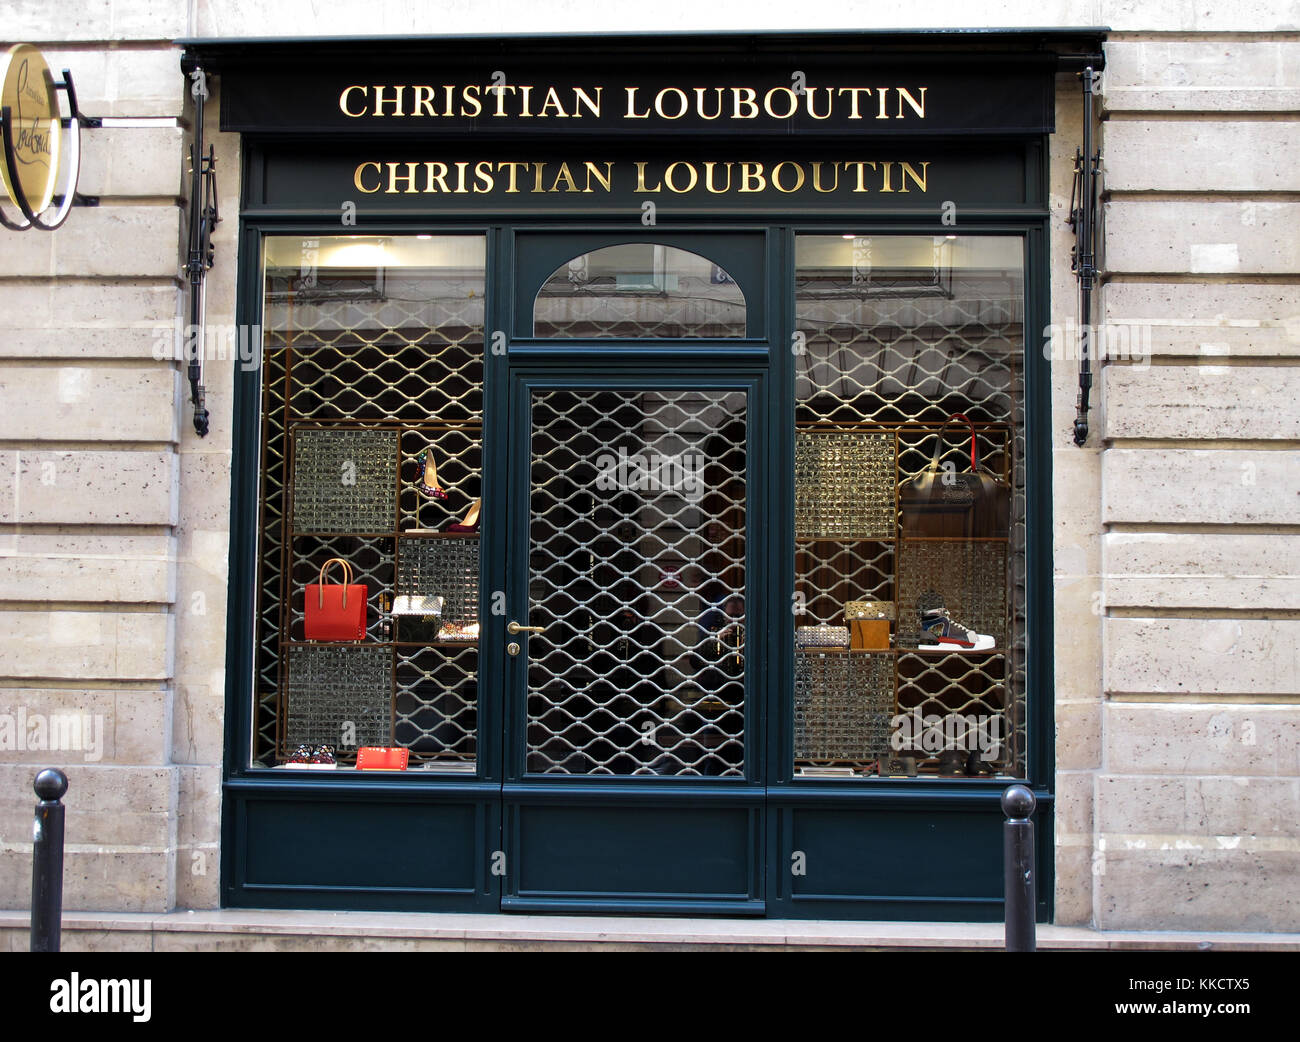 Sydøst dejligt at møde dig Lykkelig Christian Louboutin famous luxury shoe shop; Left bank; Paris, France,  Europe Stock Photo - Alamy